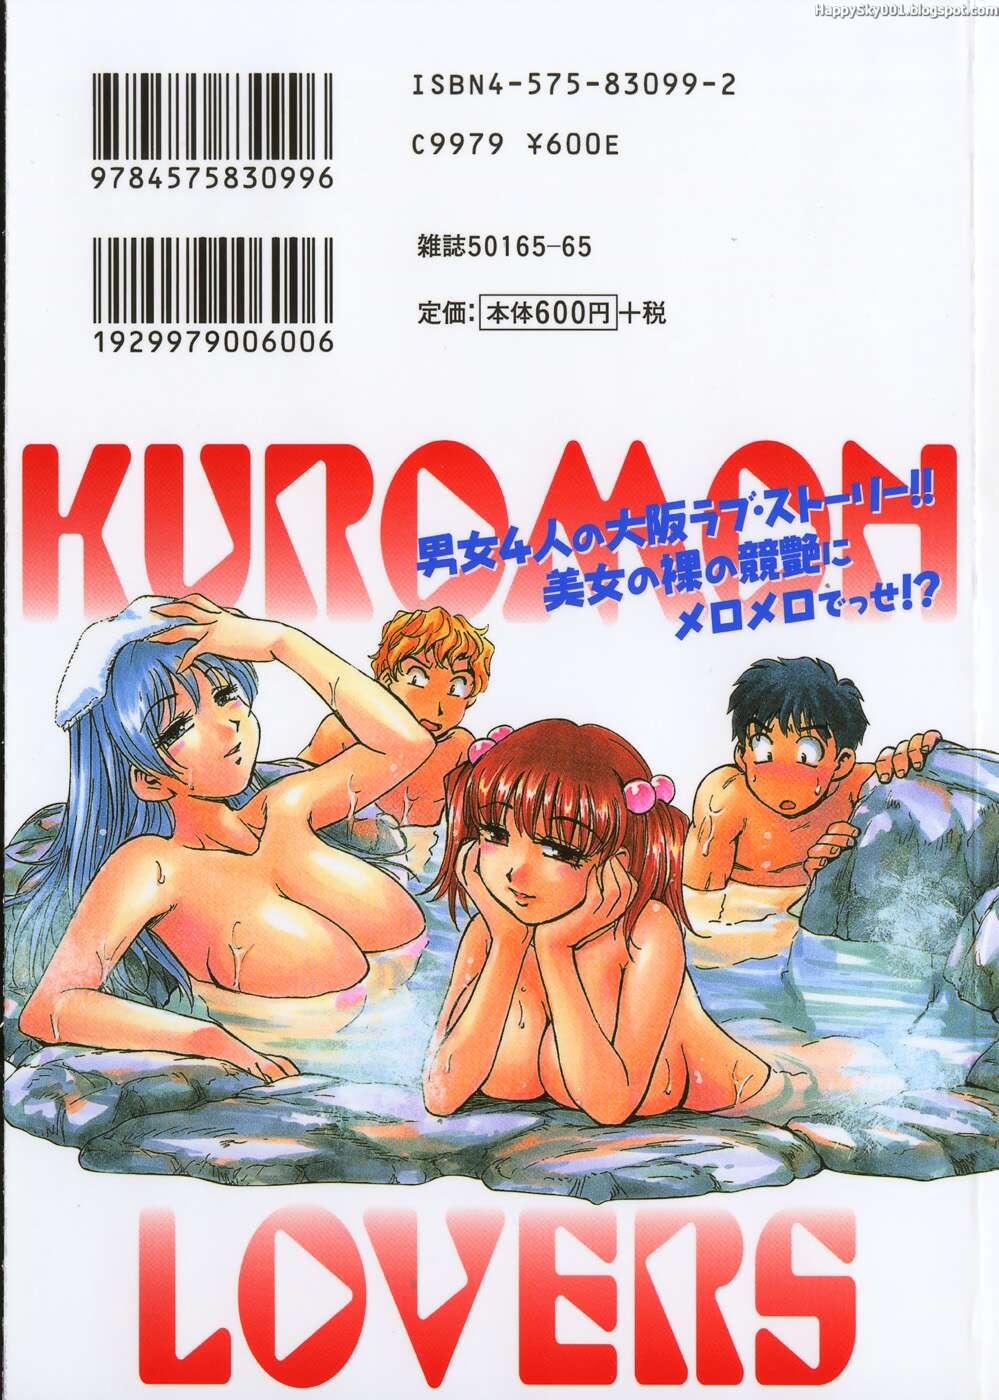 [MOE KIRARA] Kuromon Lovers 